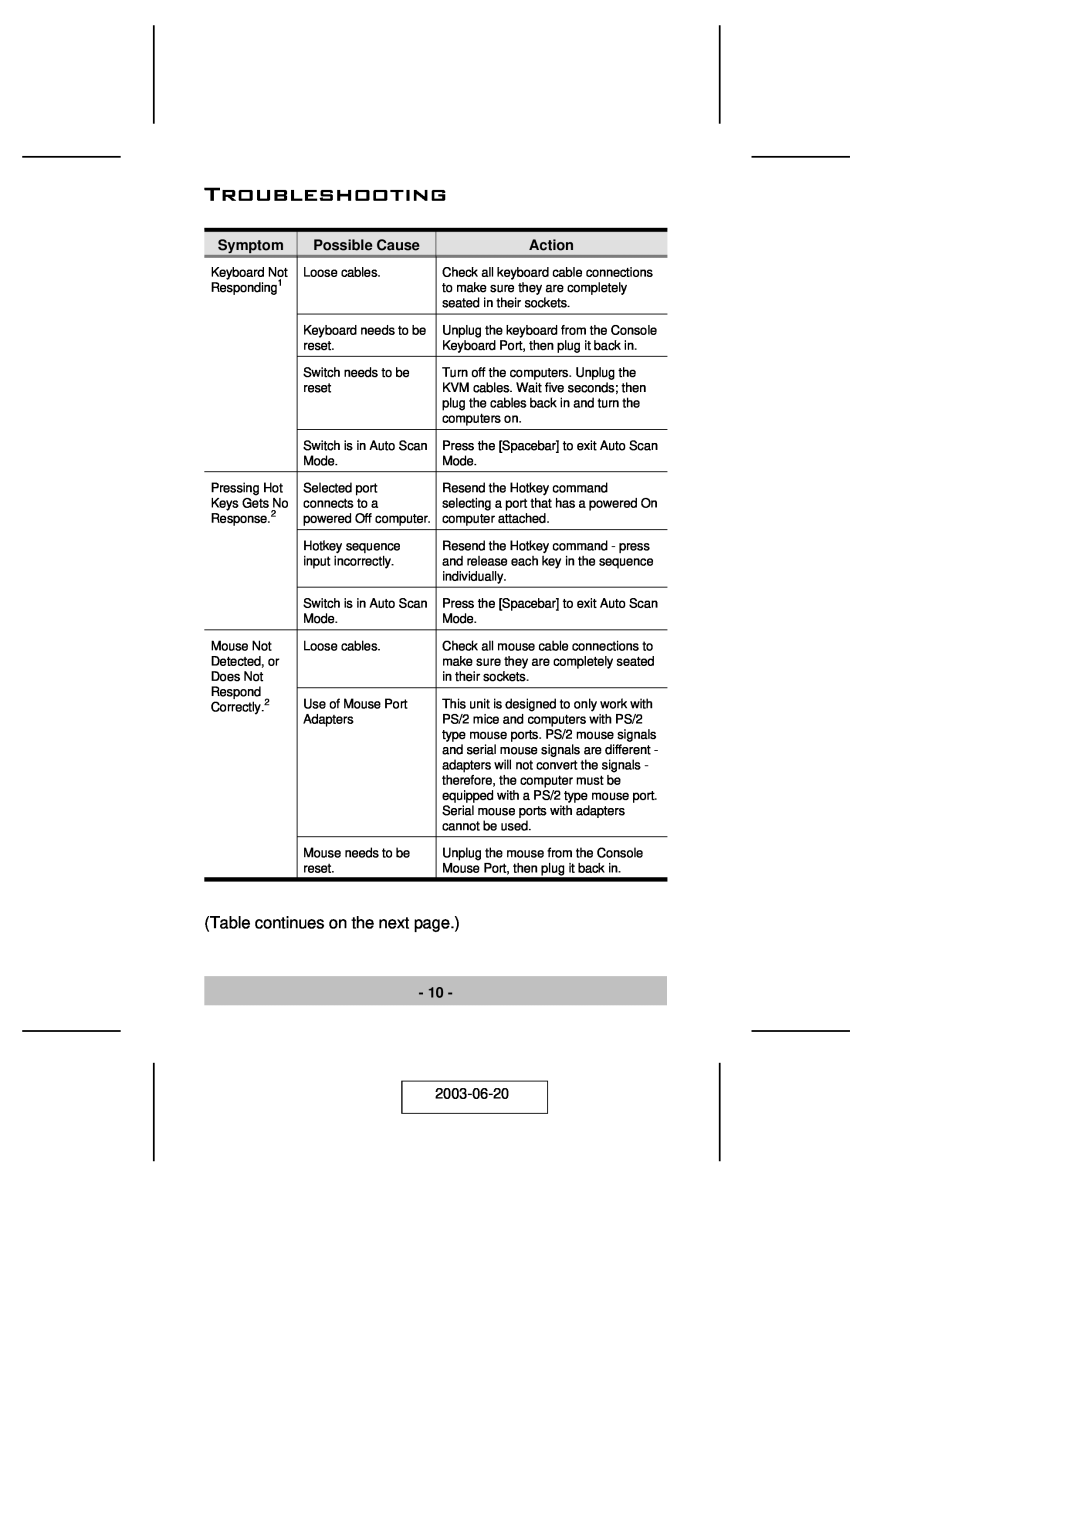 ATEN Technology KVM CS-62 user manual Troubleshooting, Symptom, Possible Cause, Action, 2003-06-20 